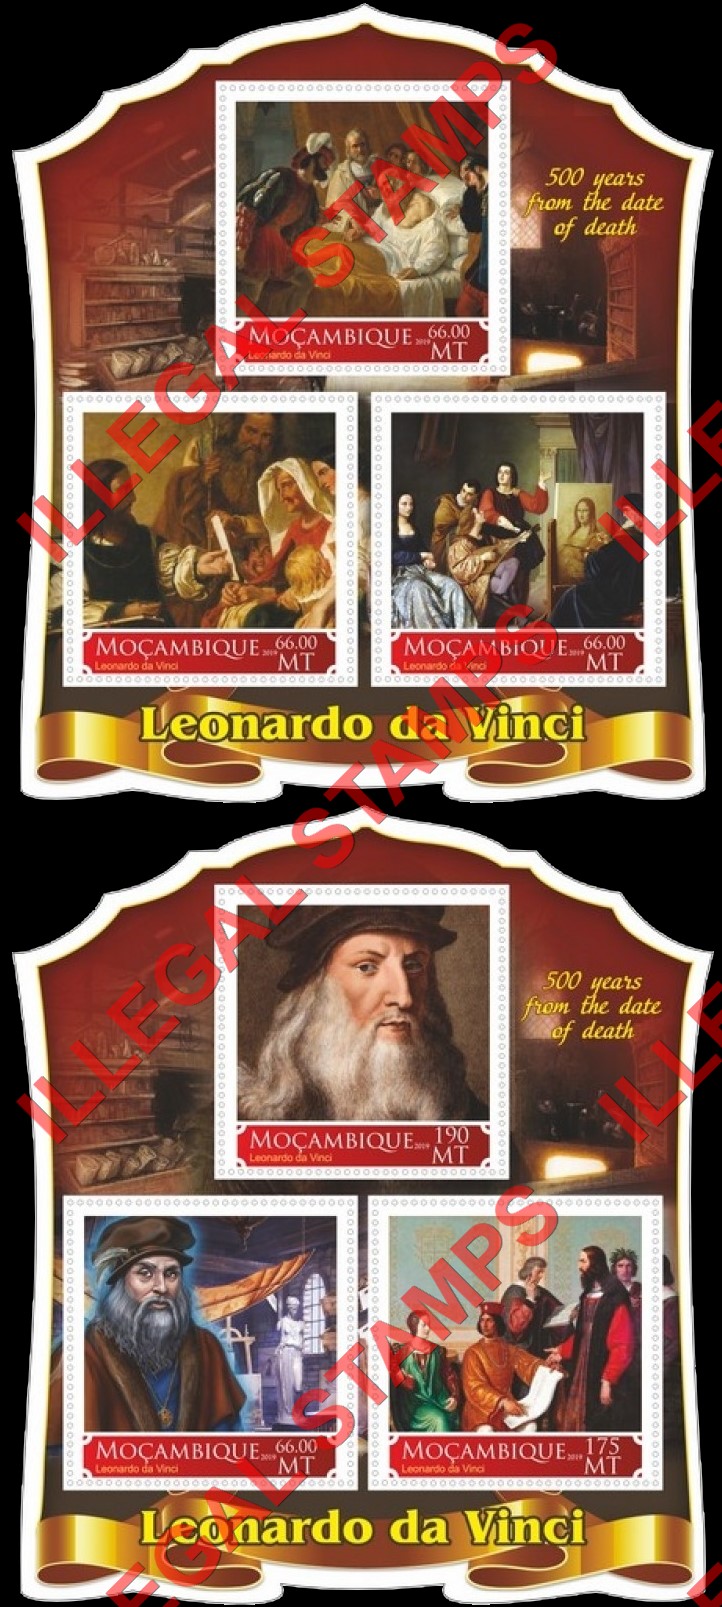  Mozambique 2019 Leonardo da Vinci (different) Counterfeit Illegal Stamp Souvenir Sheets of 3